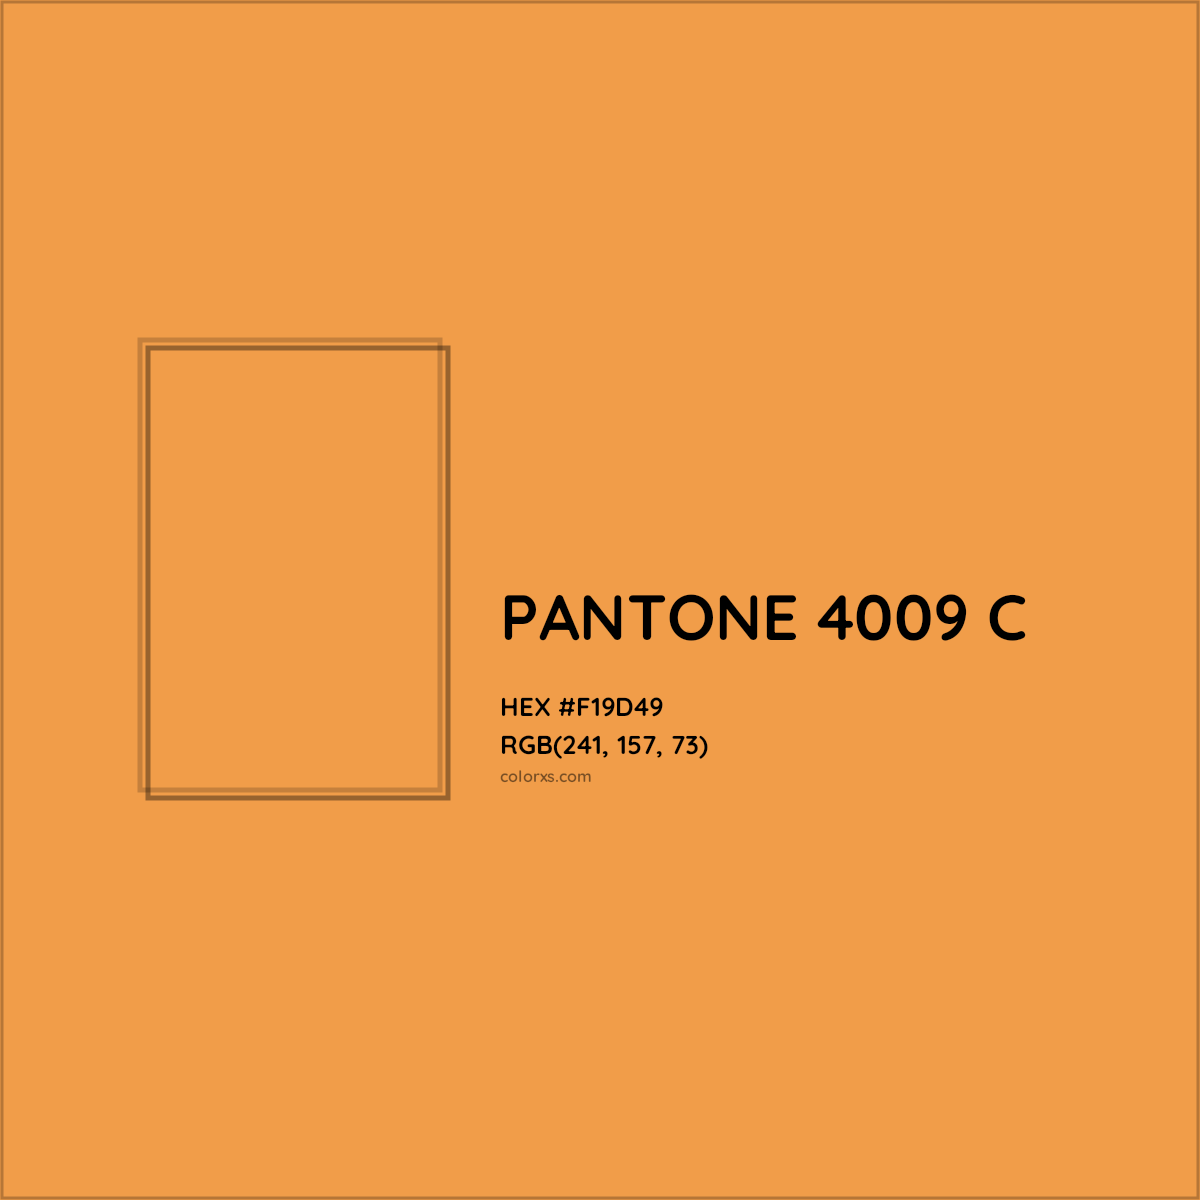 HEX #F19D49 PANTONE 4009 C CMS Pantone PMS - Color Code